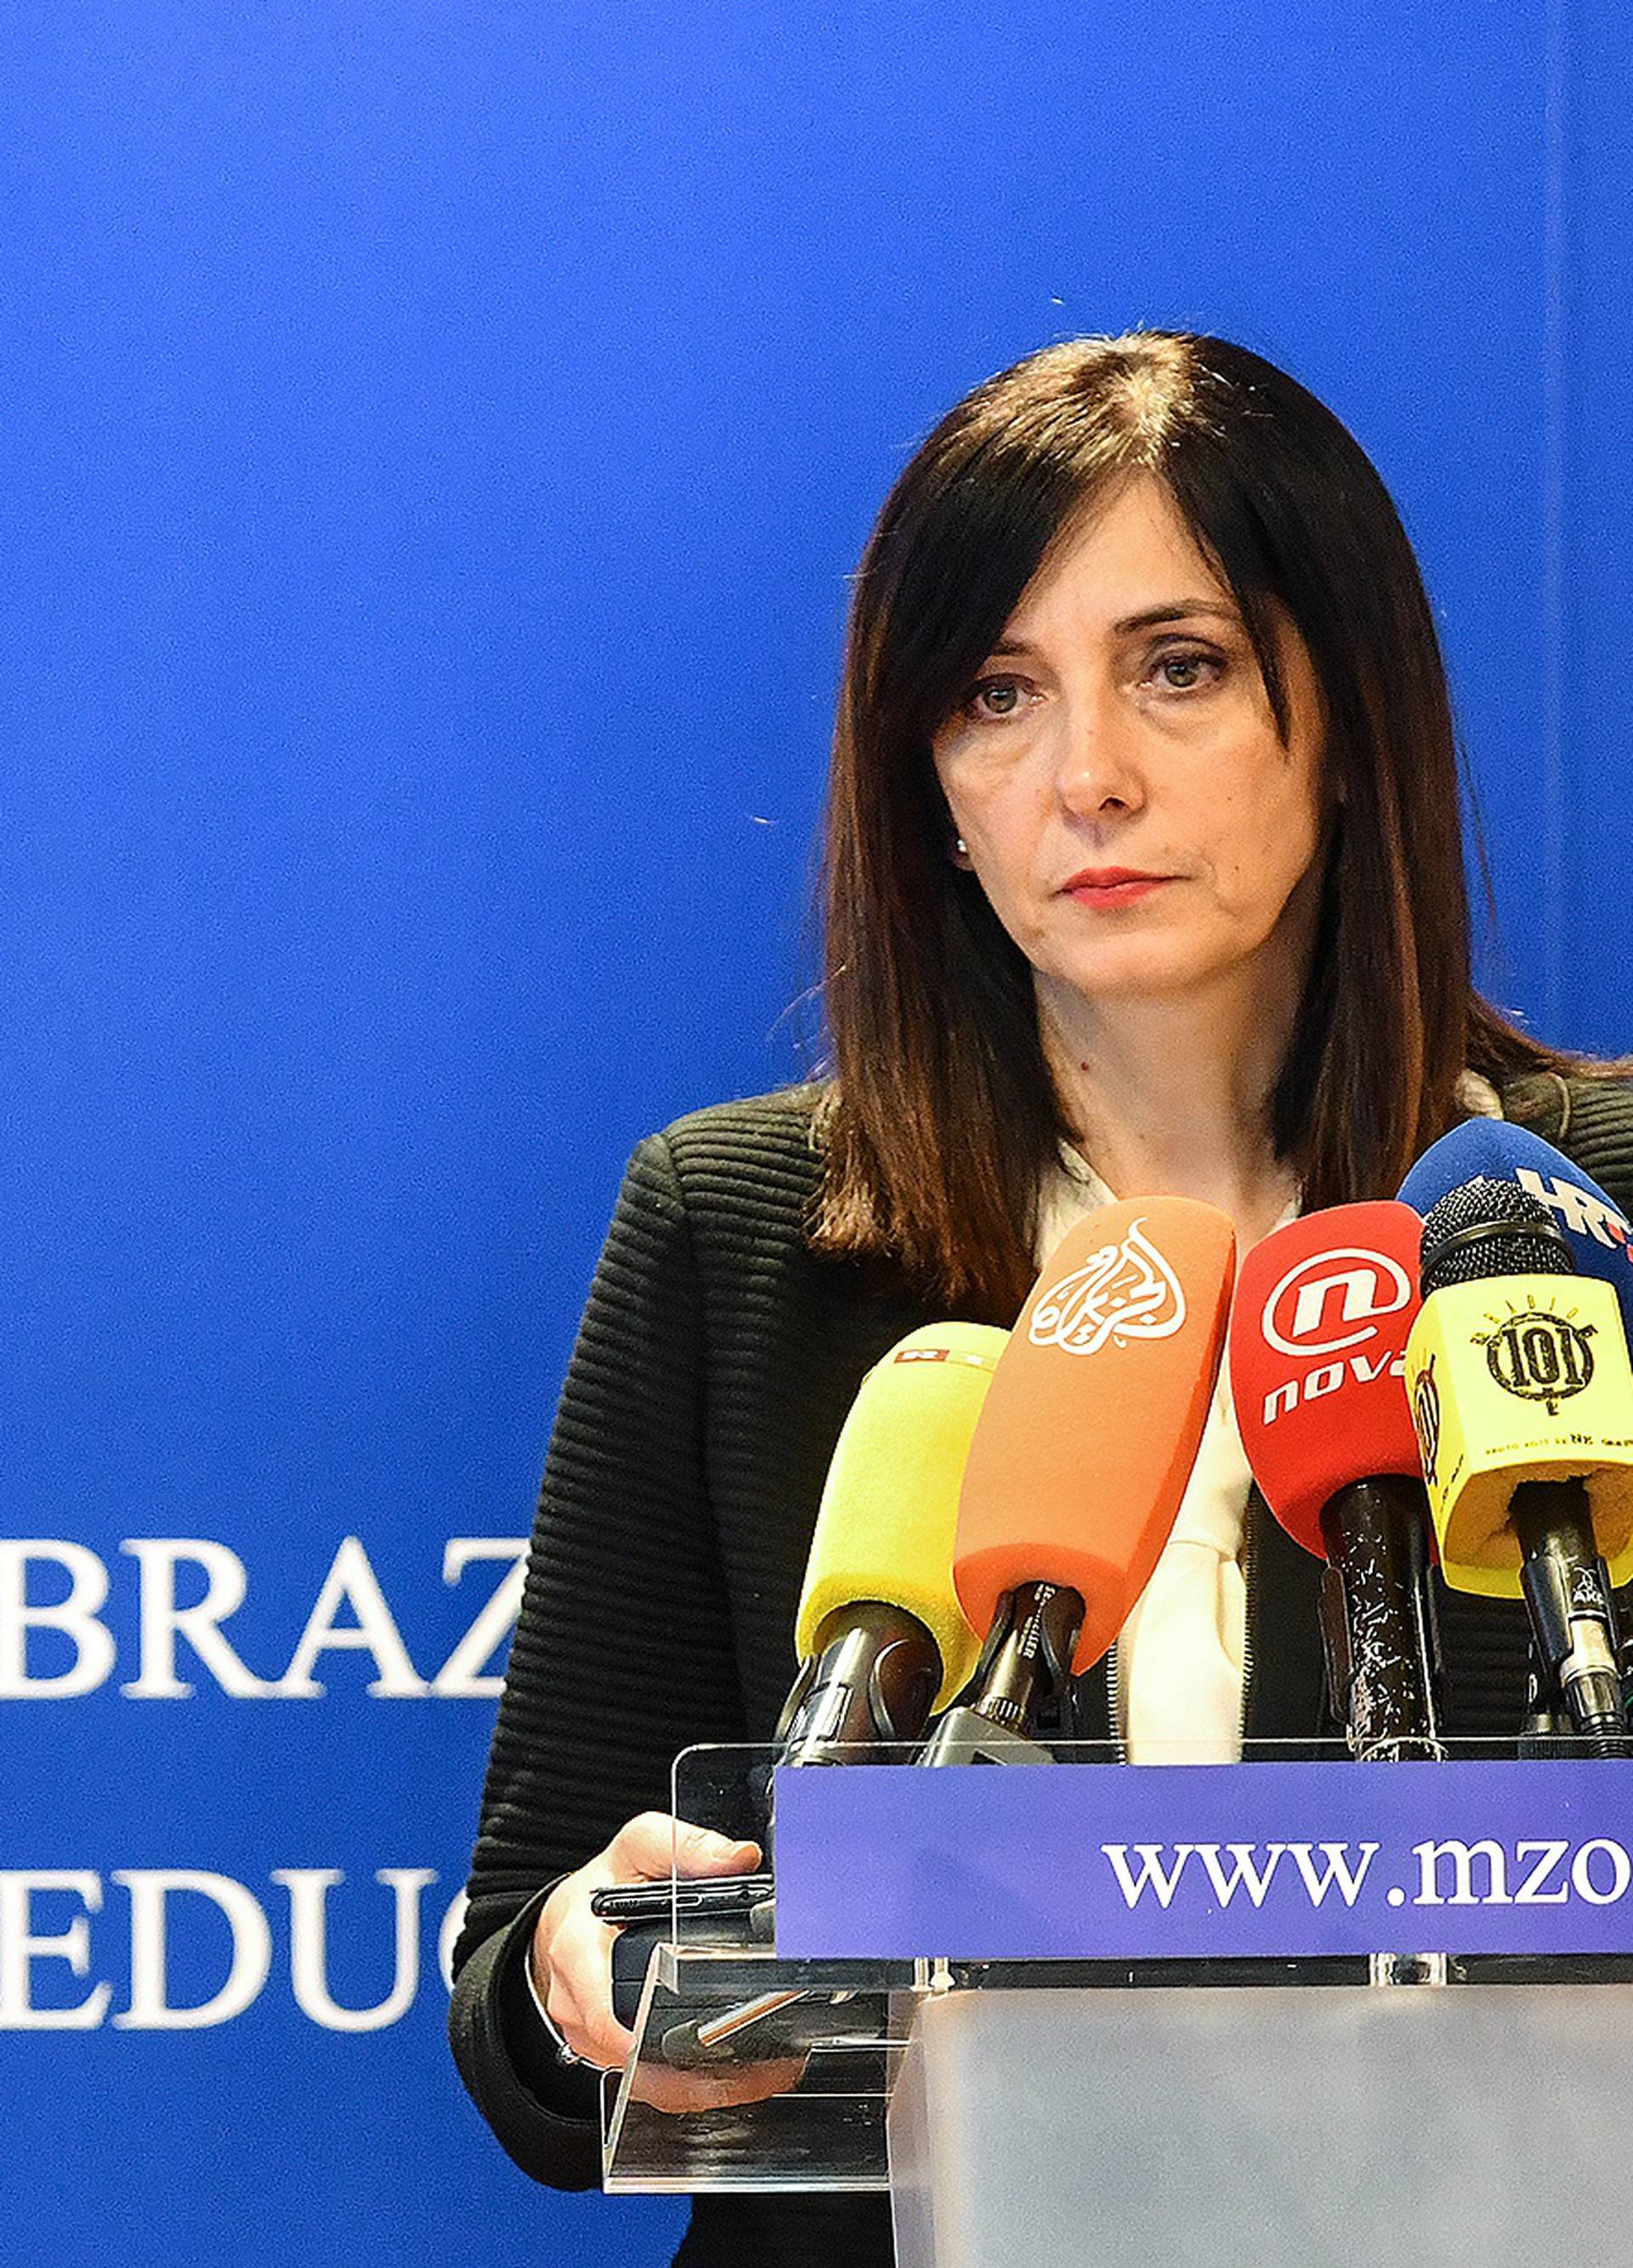 Zagreb: Ministrica Divjak na izvanrednoj konferenciji o laÅ¾nim diplomama